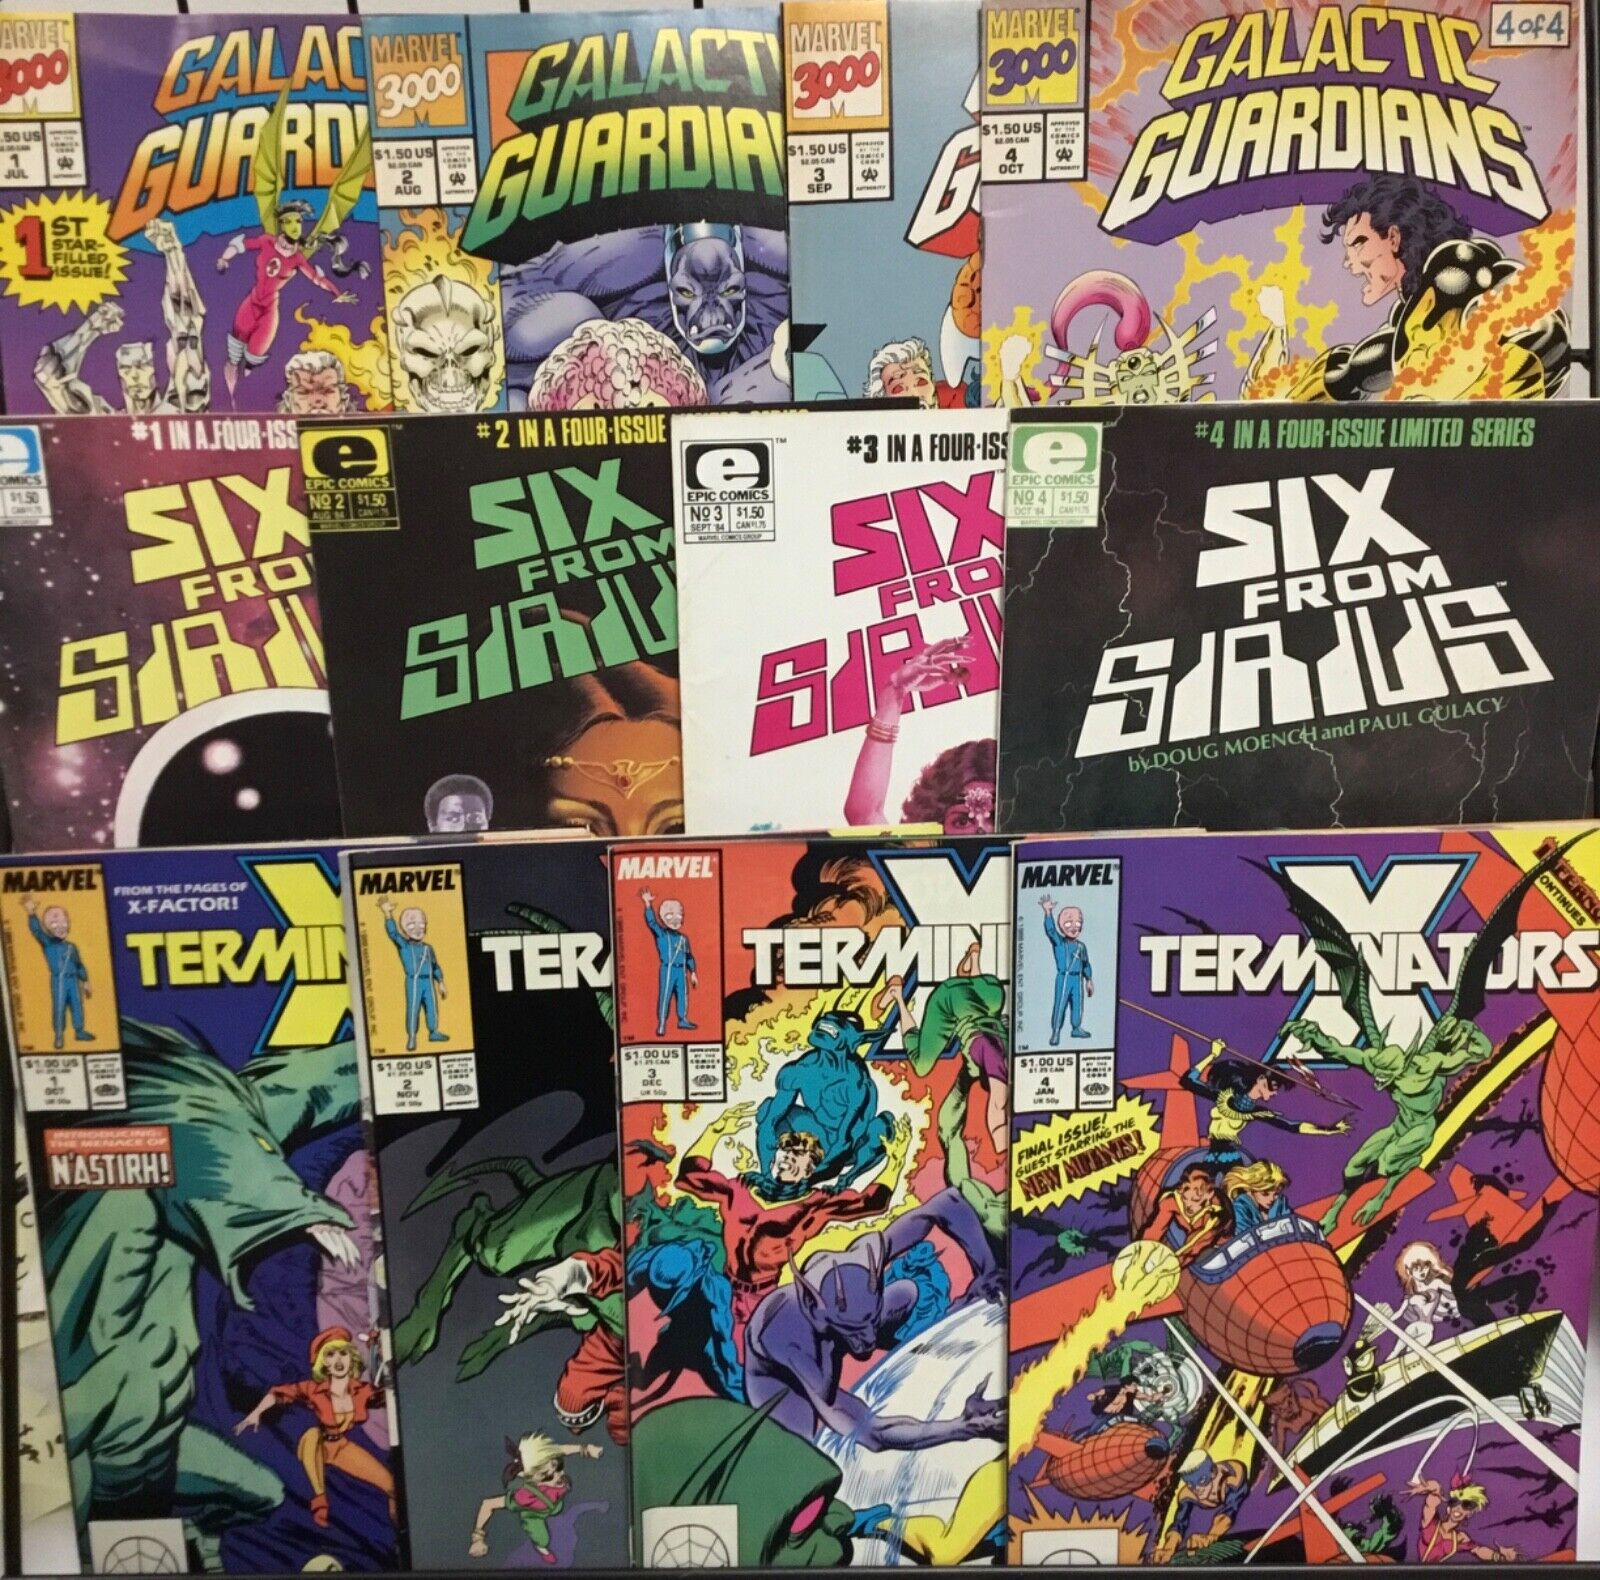 Marvel Comics Galactic Guardians, Six From Sirius 1-4, XTerminators 1-4